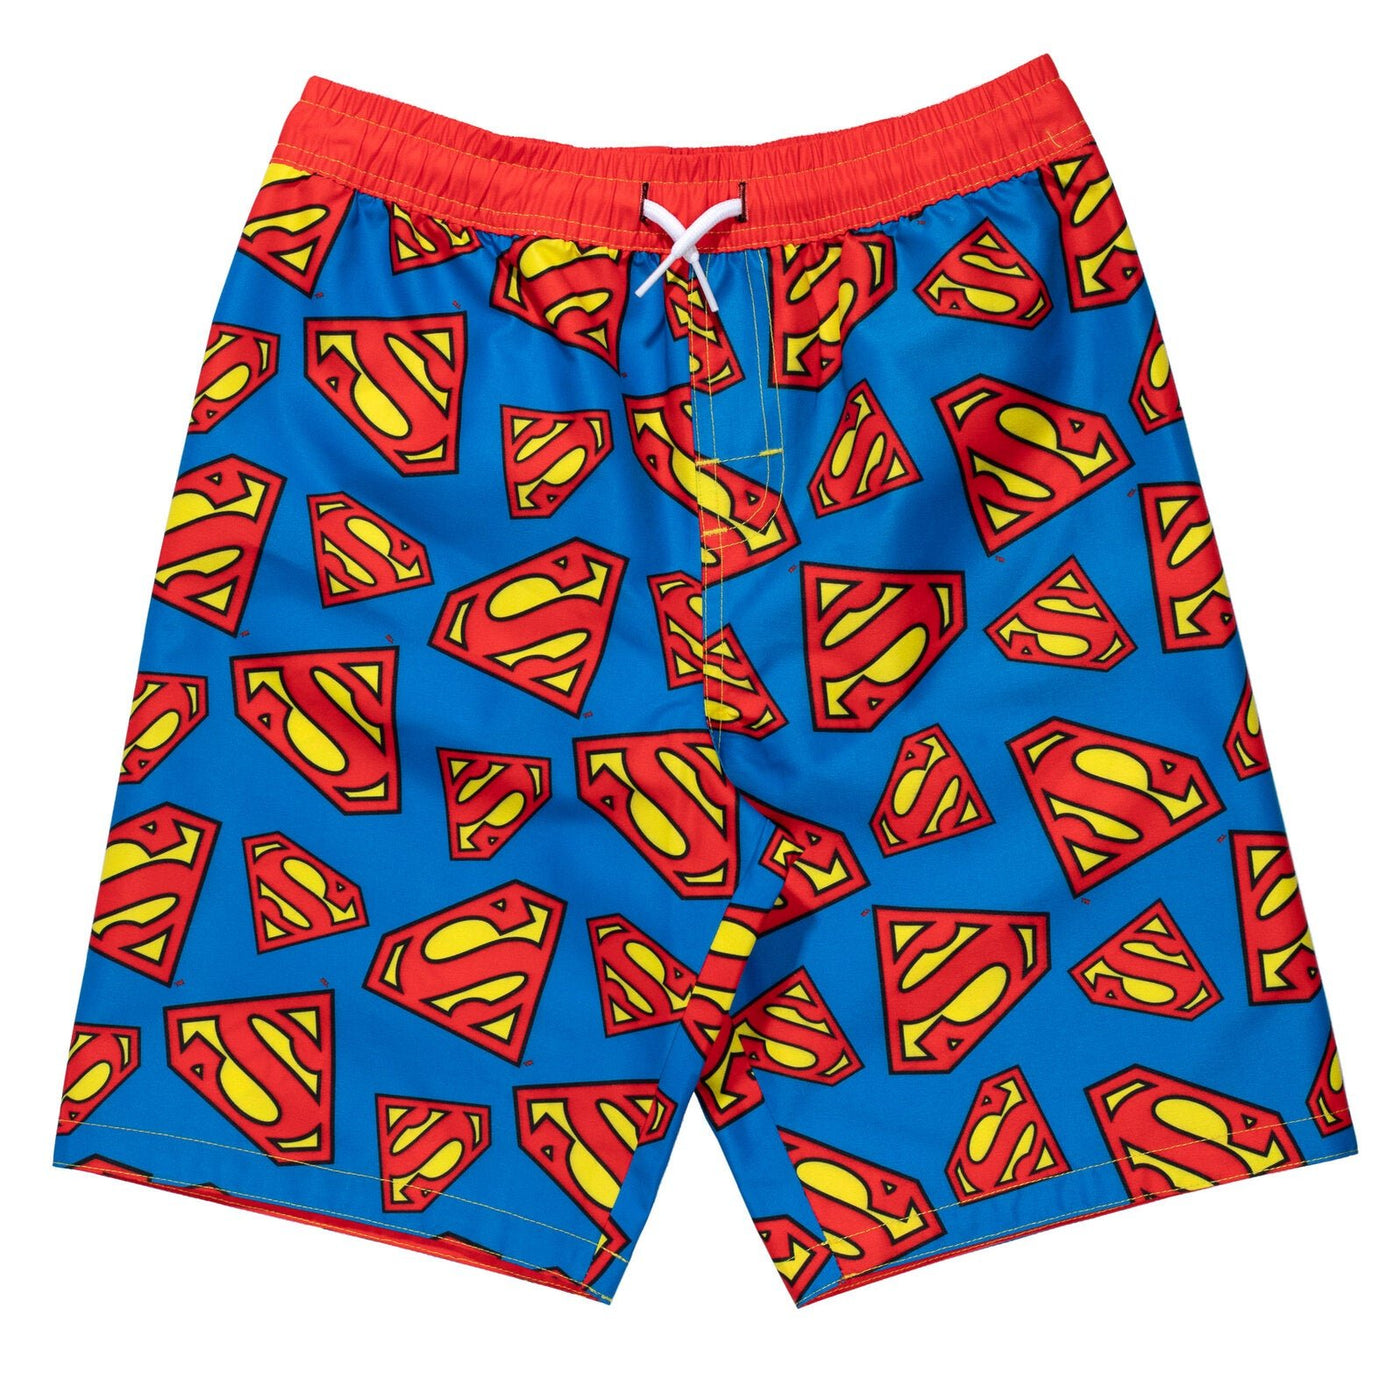 DC Comics Justice League Superman UPF 50+ Rash Guard Swim Trunks Outfit Set - imagikids